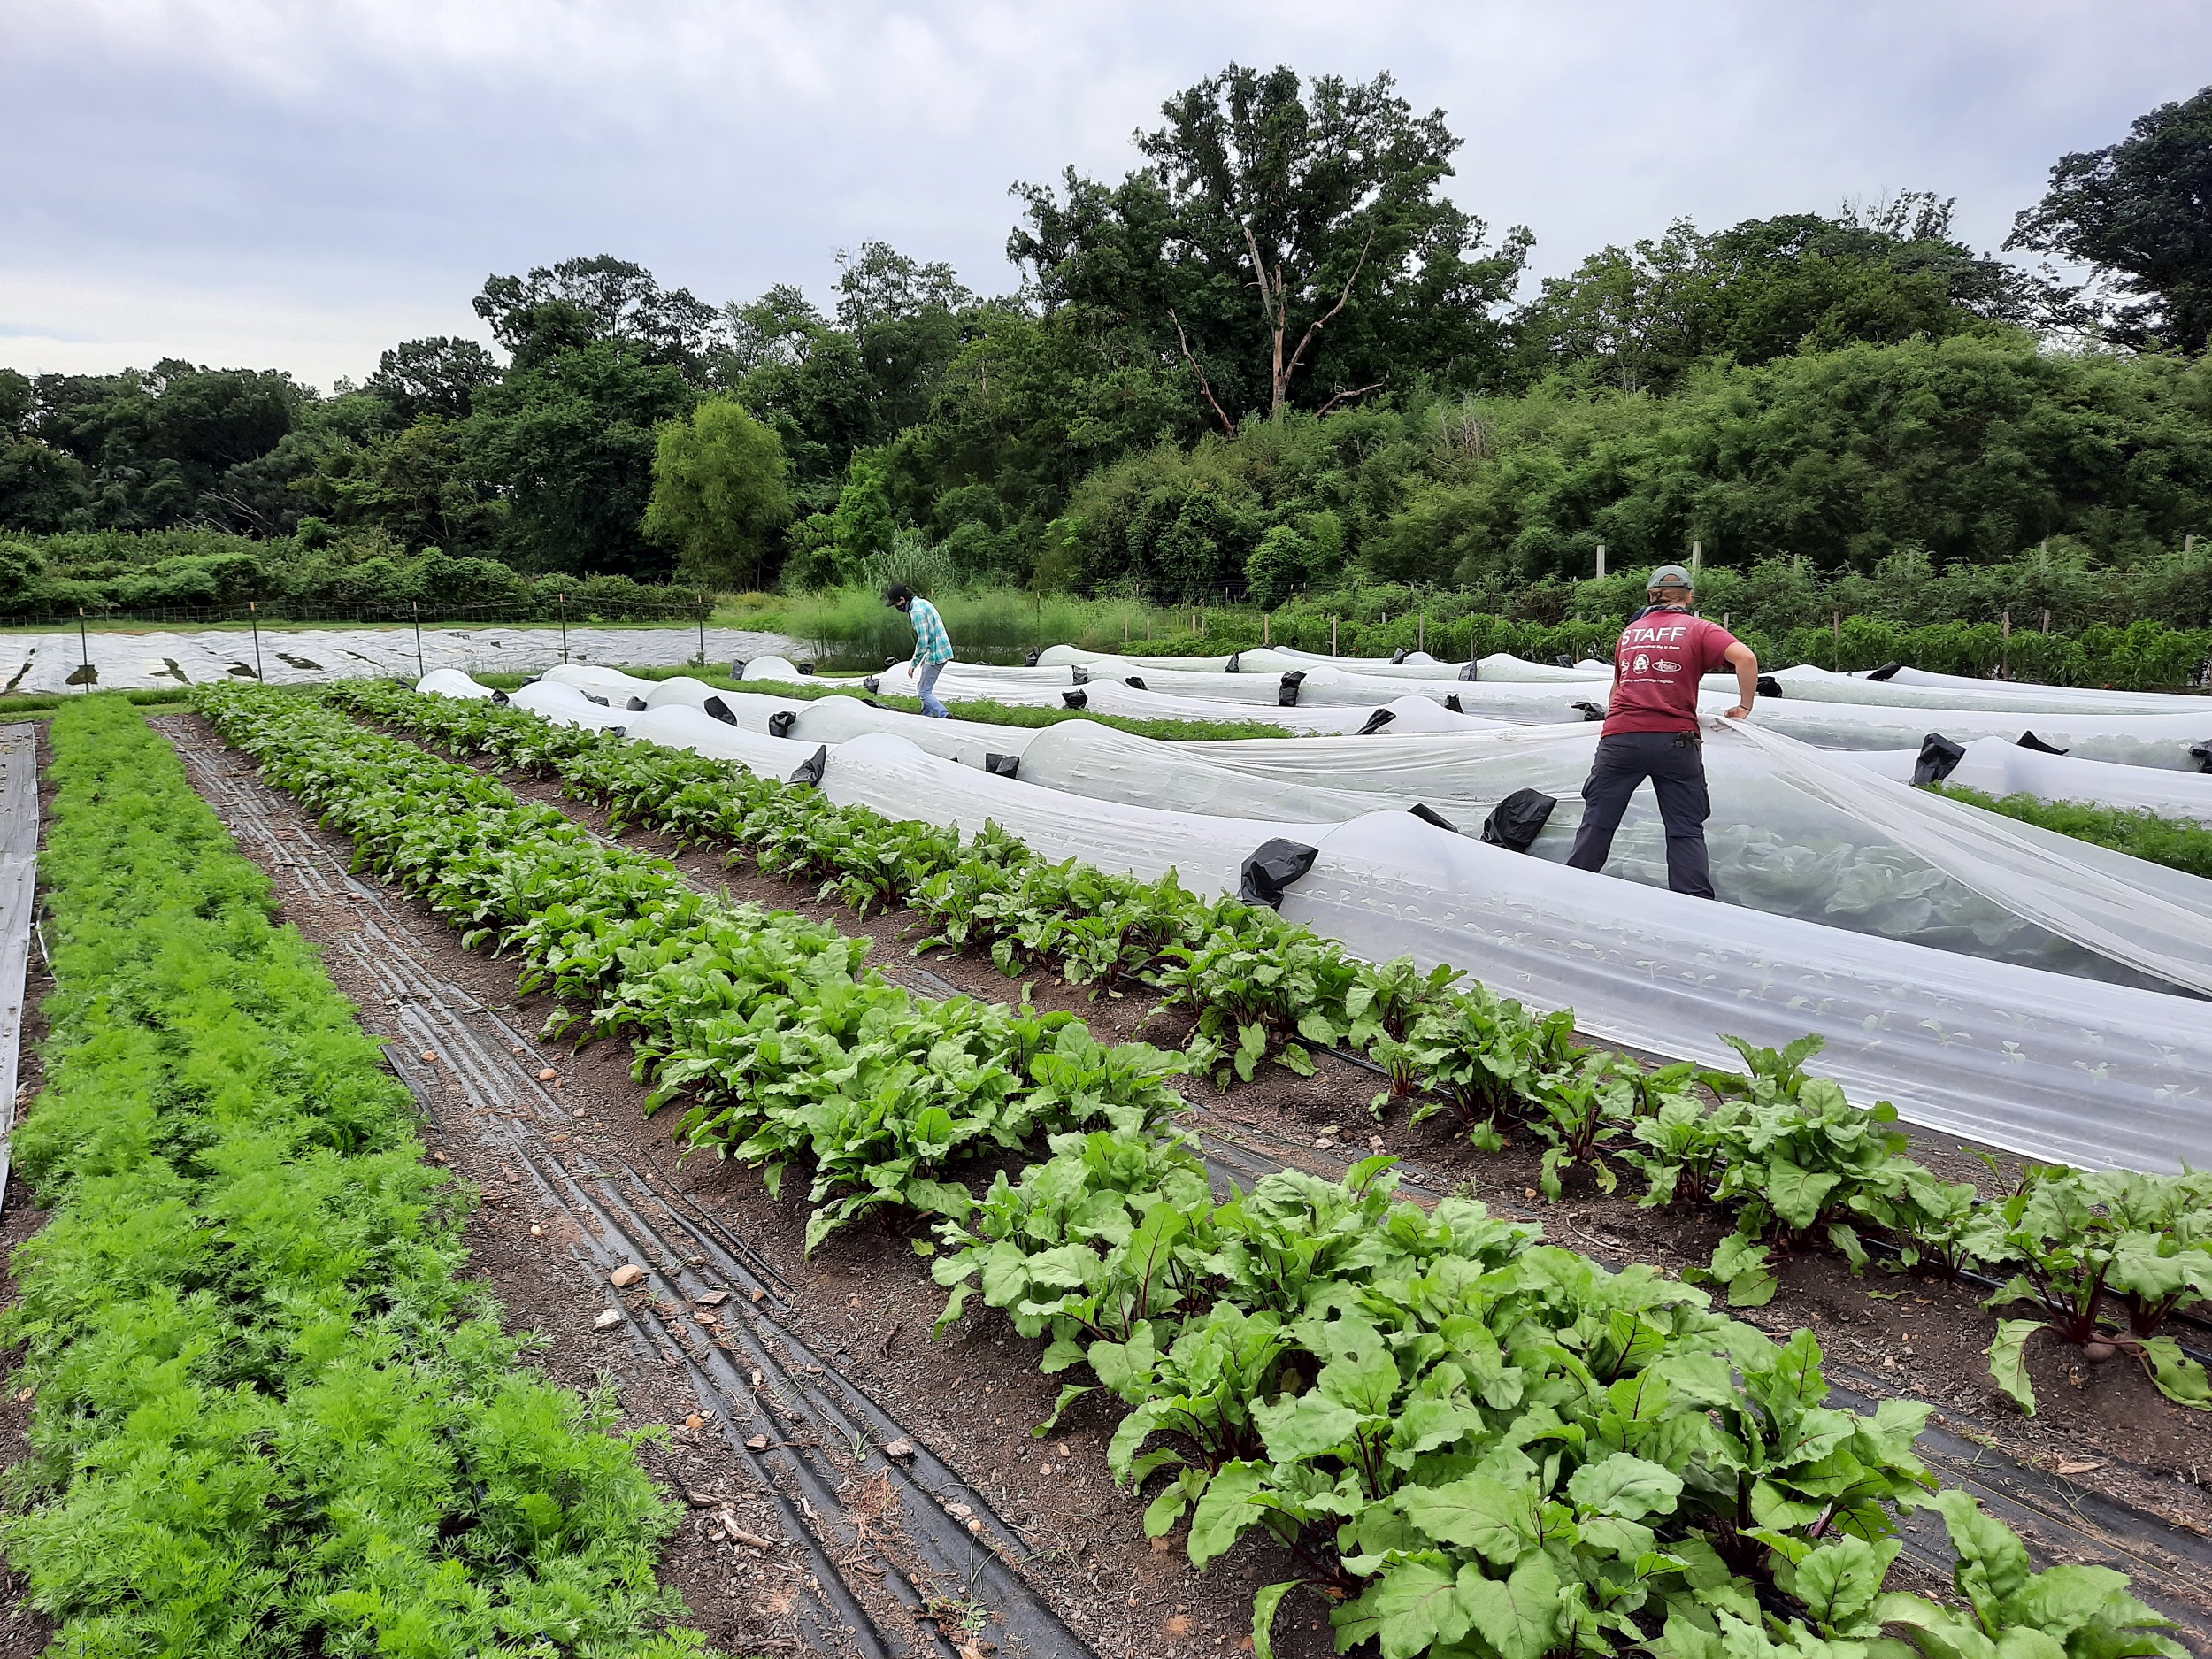 Student Farm staff grow nutrient-dense produce.